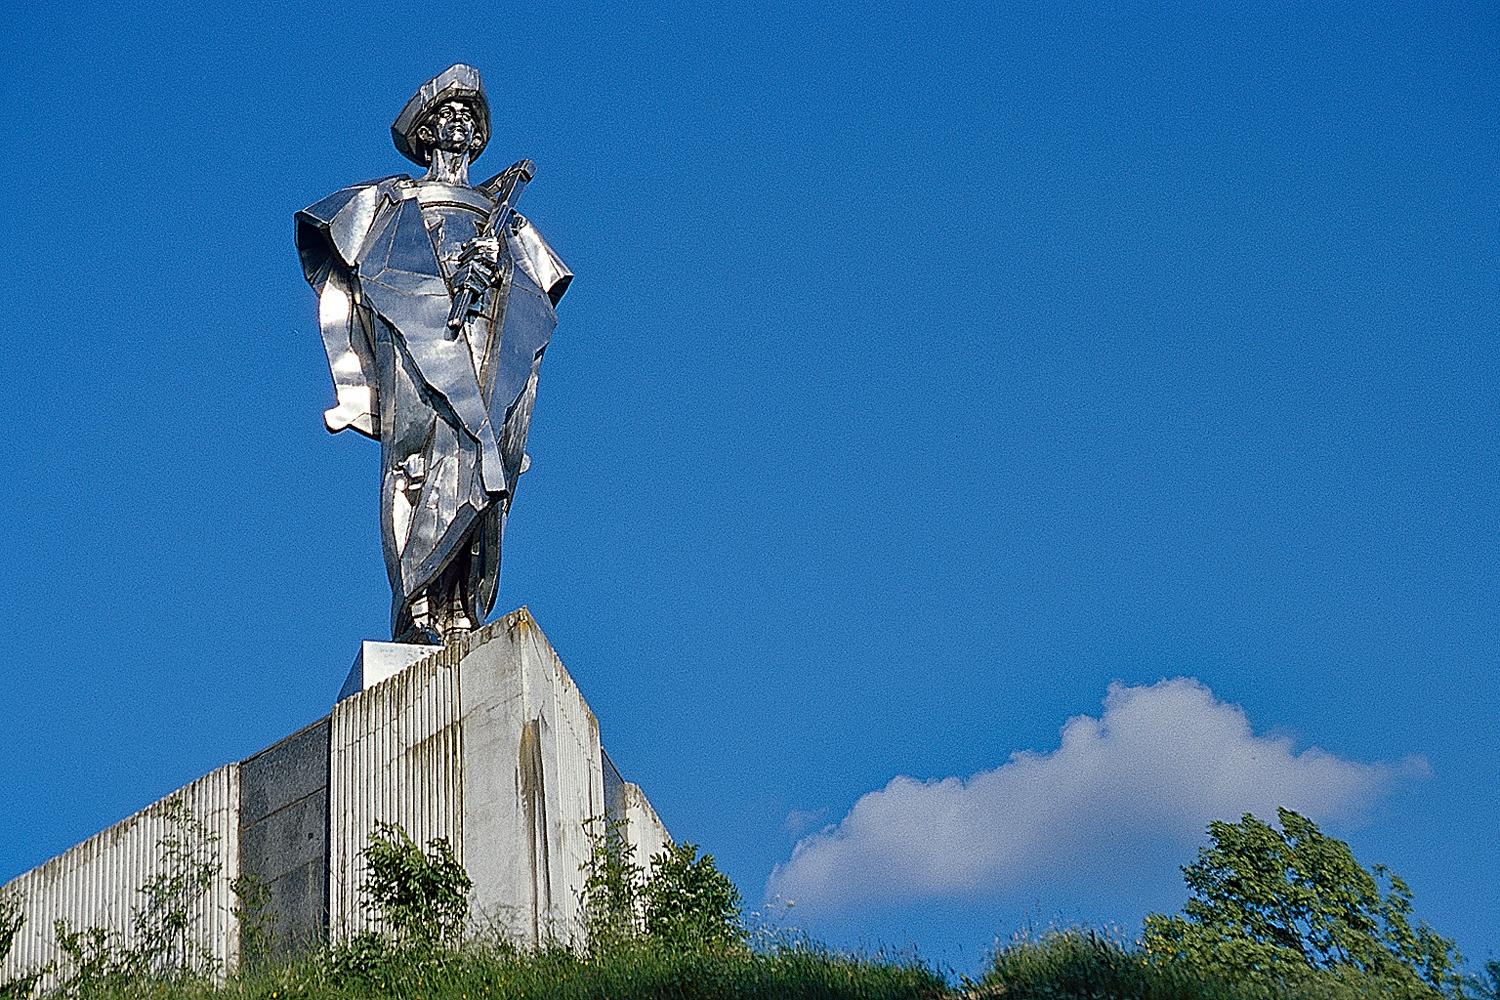 Jánošíkstatue in Terchová